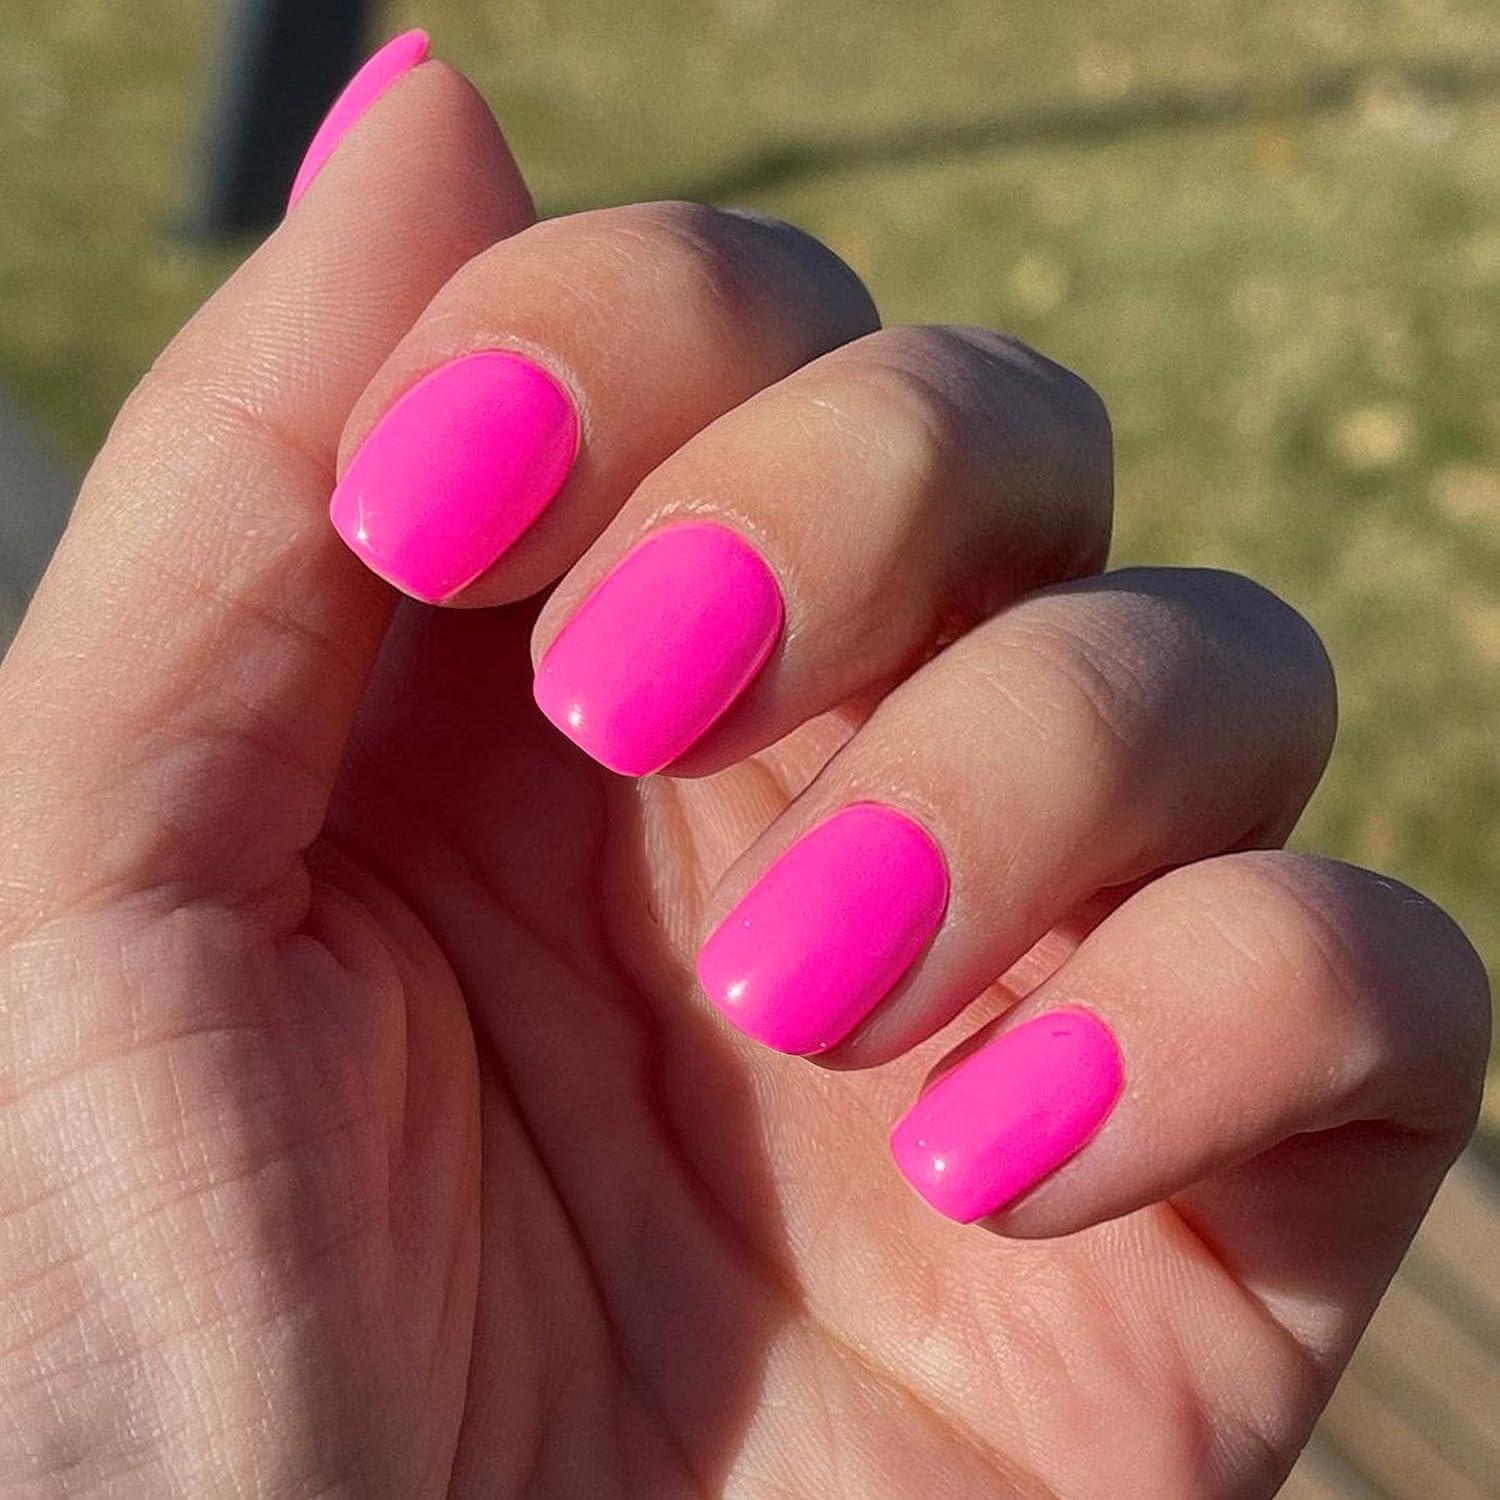 Pink Manicure on Long Beautiful Nails Stock Image - Image of hand, fashion:  176805763